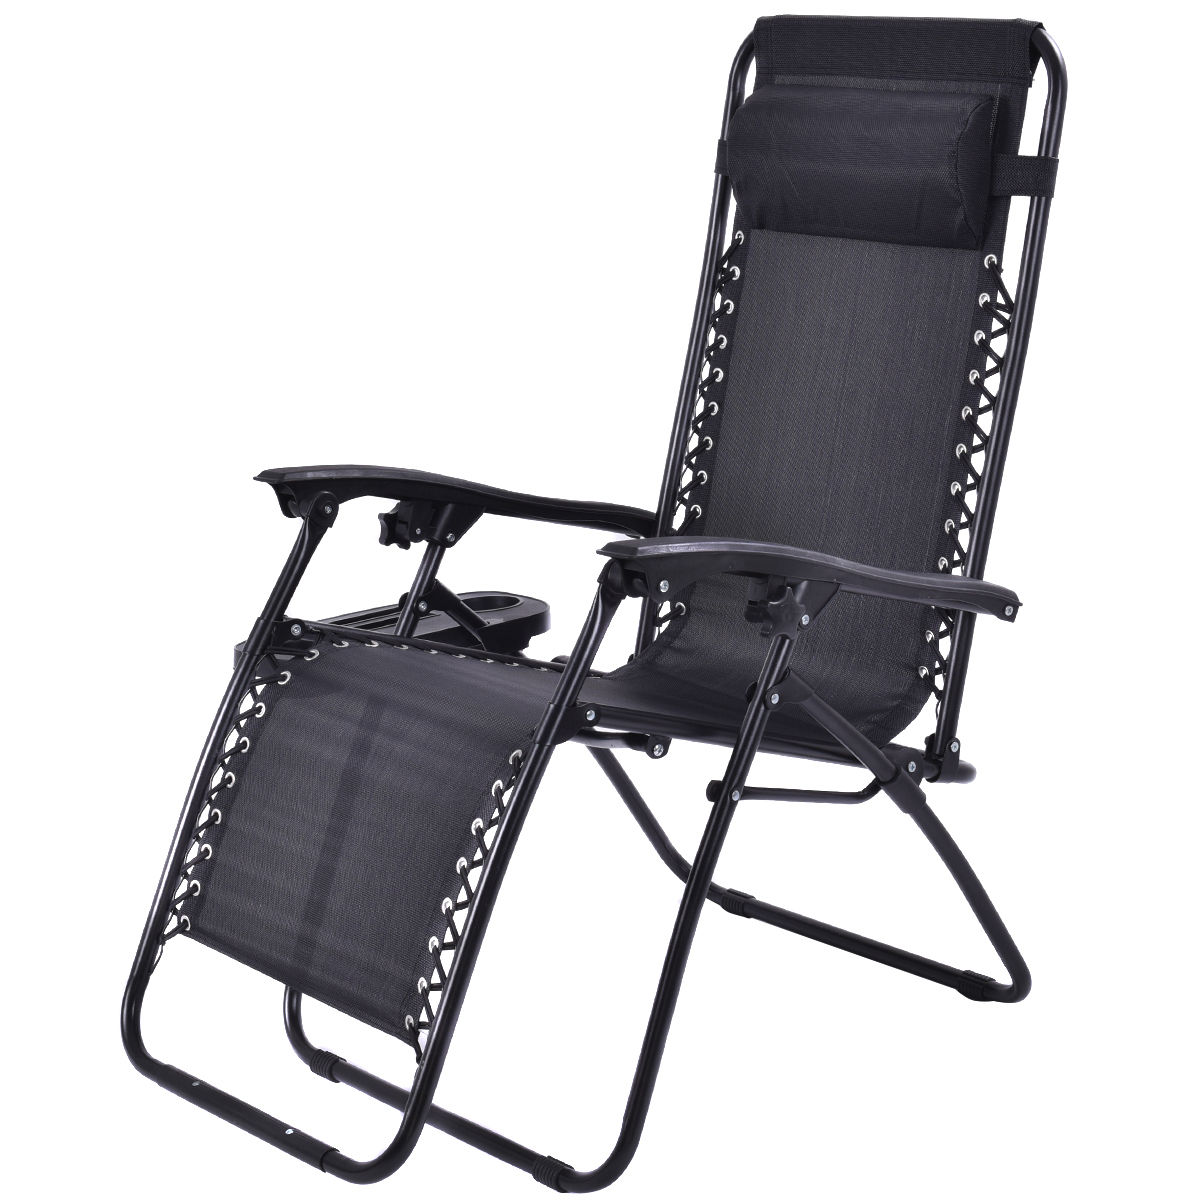 Topbuy 2PC Zero Gravity Chair Adjustable Recliners Textiliene Black - image 5 of 6